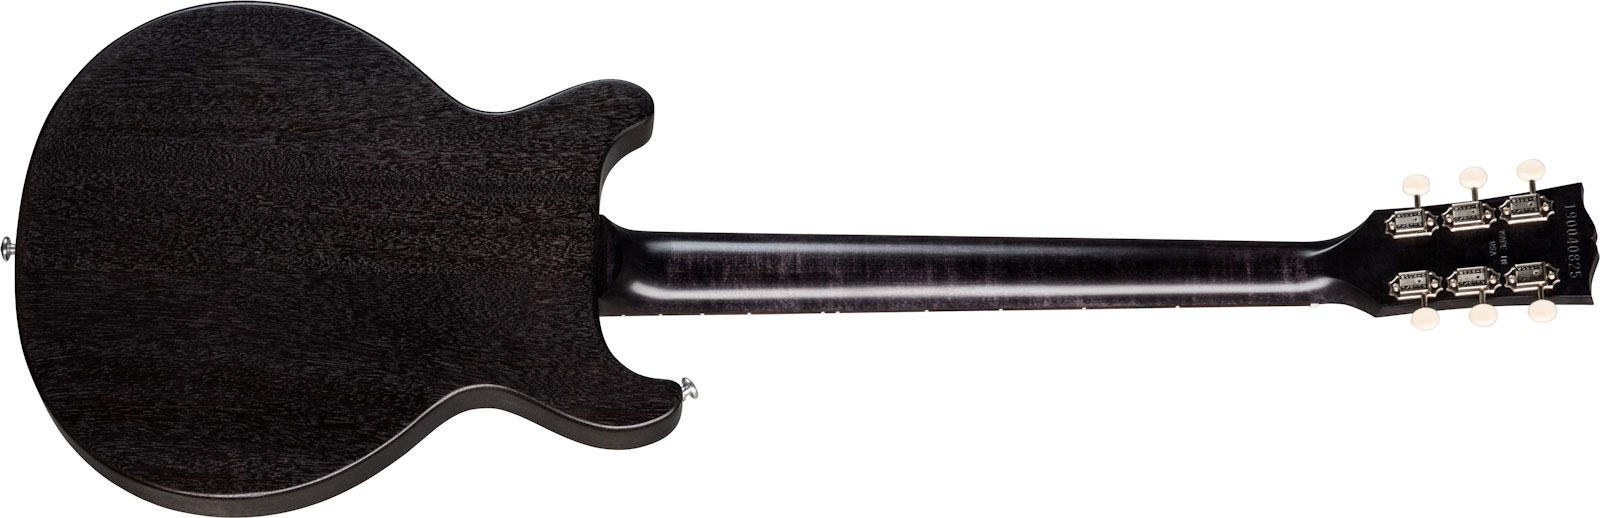 Gibson Les Paul Special Tribute Dc Modern P90 - Worn Ebony - Double Cut E-Gitarre - Variation 1